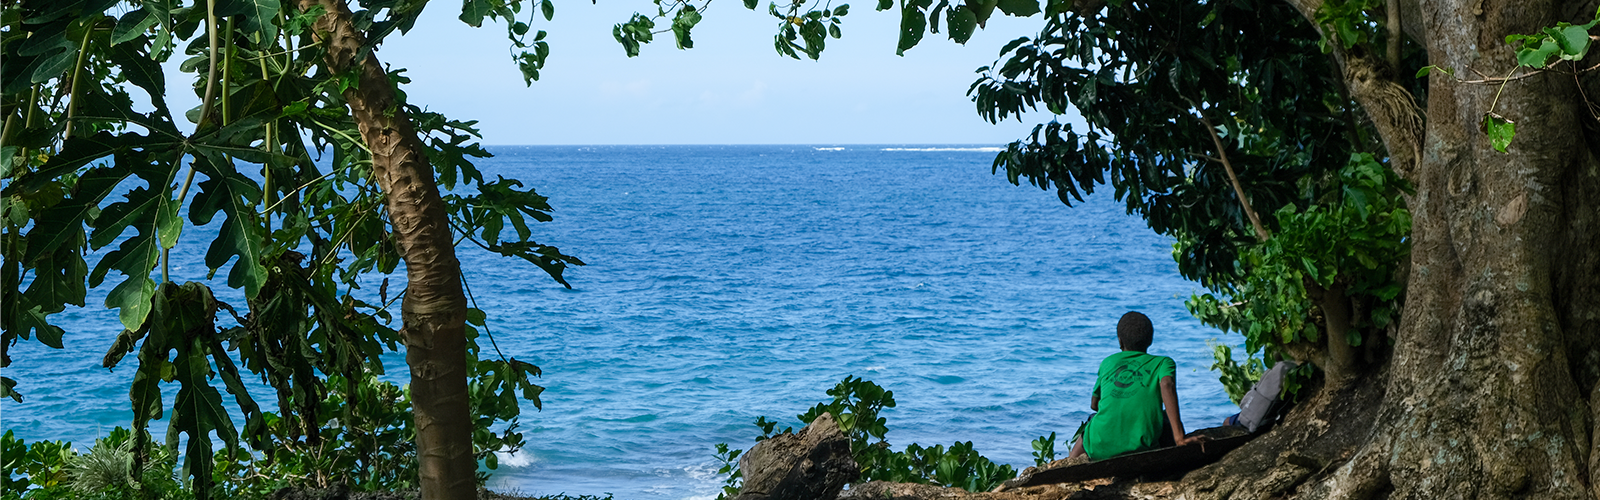 Boy looks out to sea towards an island in Vanuatu